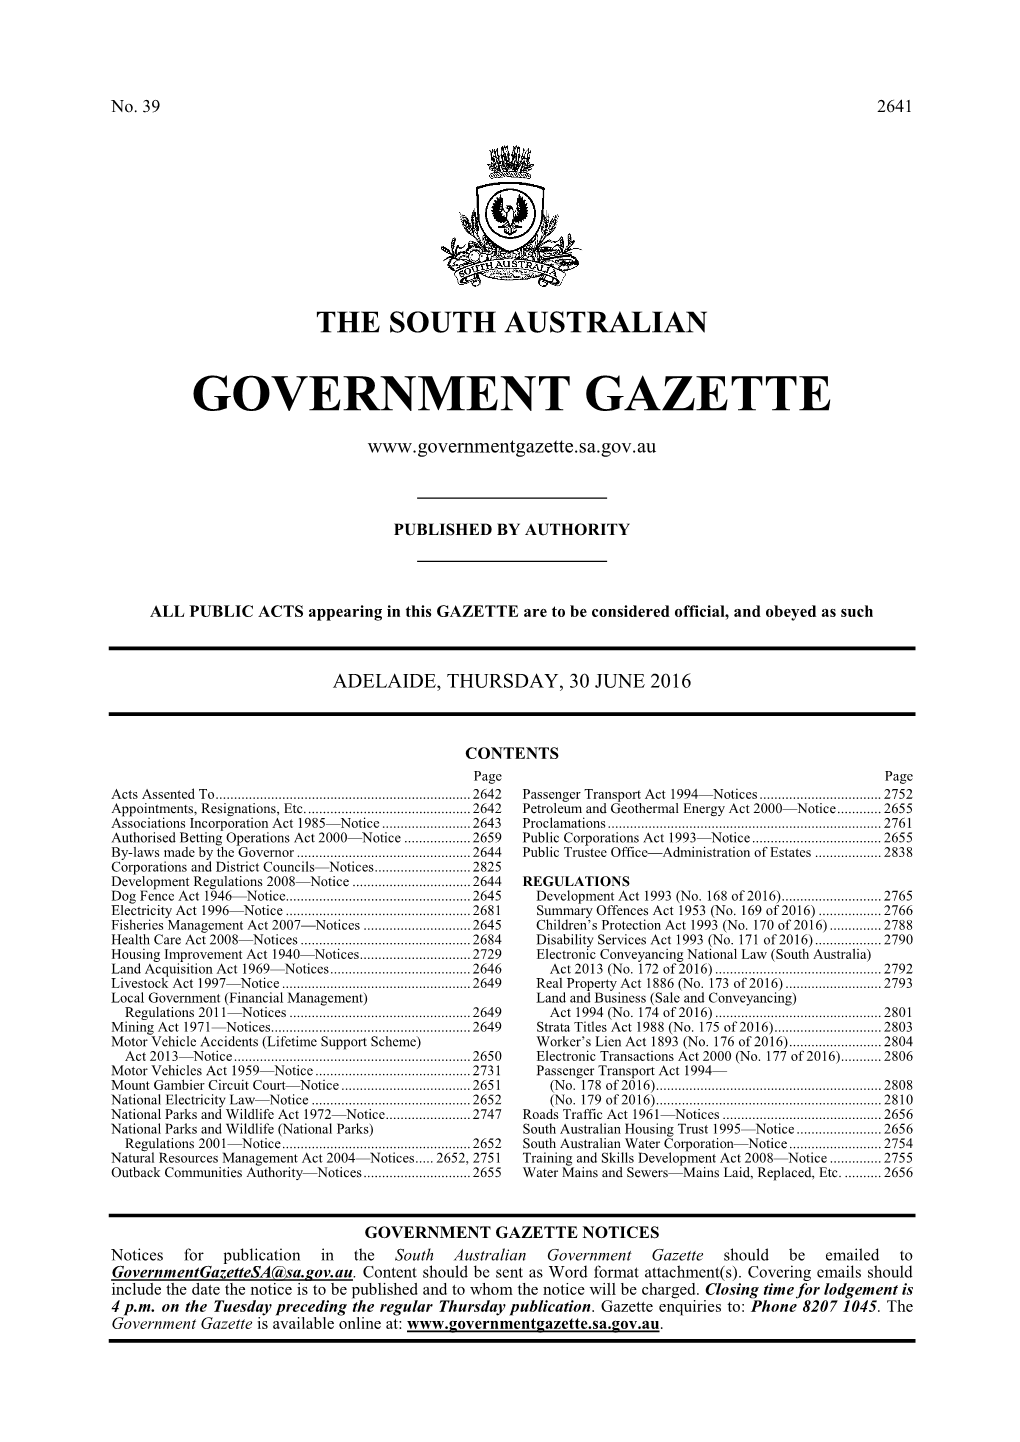 South Australian Government Gazette Should Be Emailed to Governmentgazettesa@Sa.Gov.Au